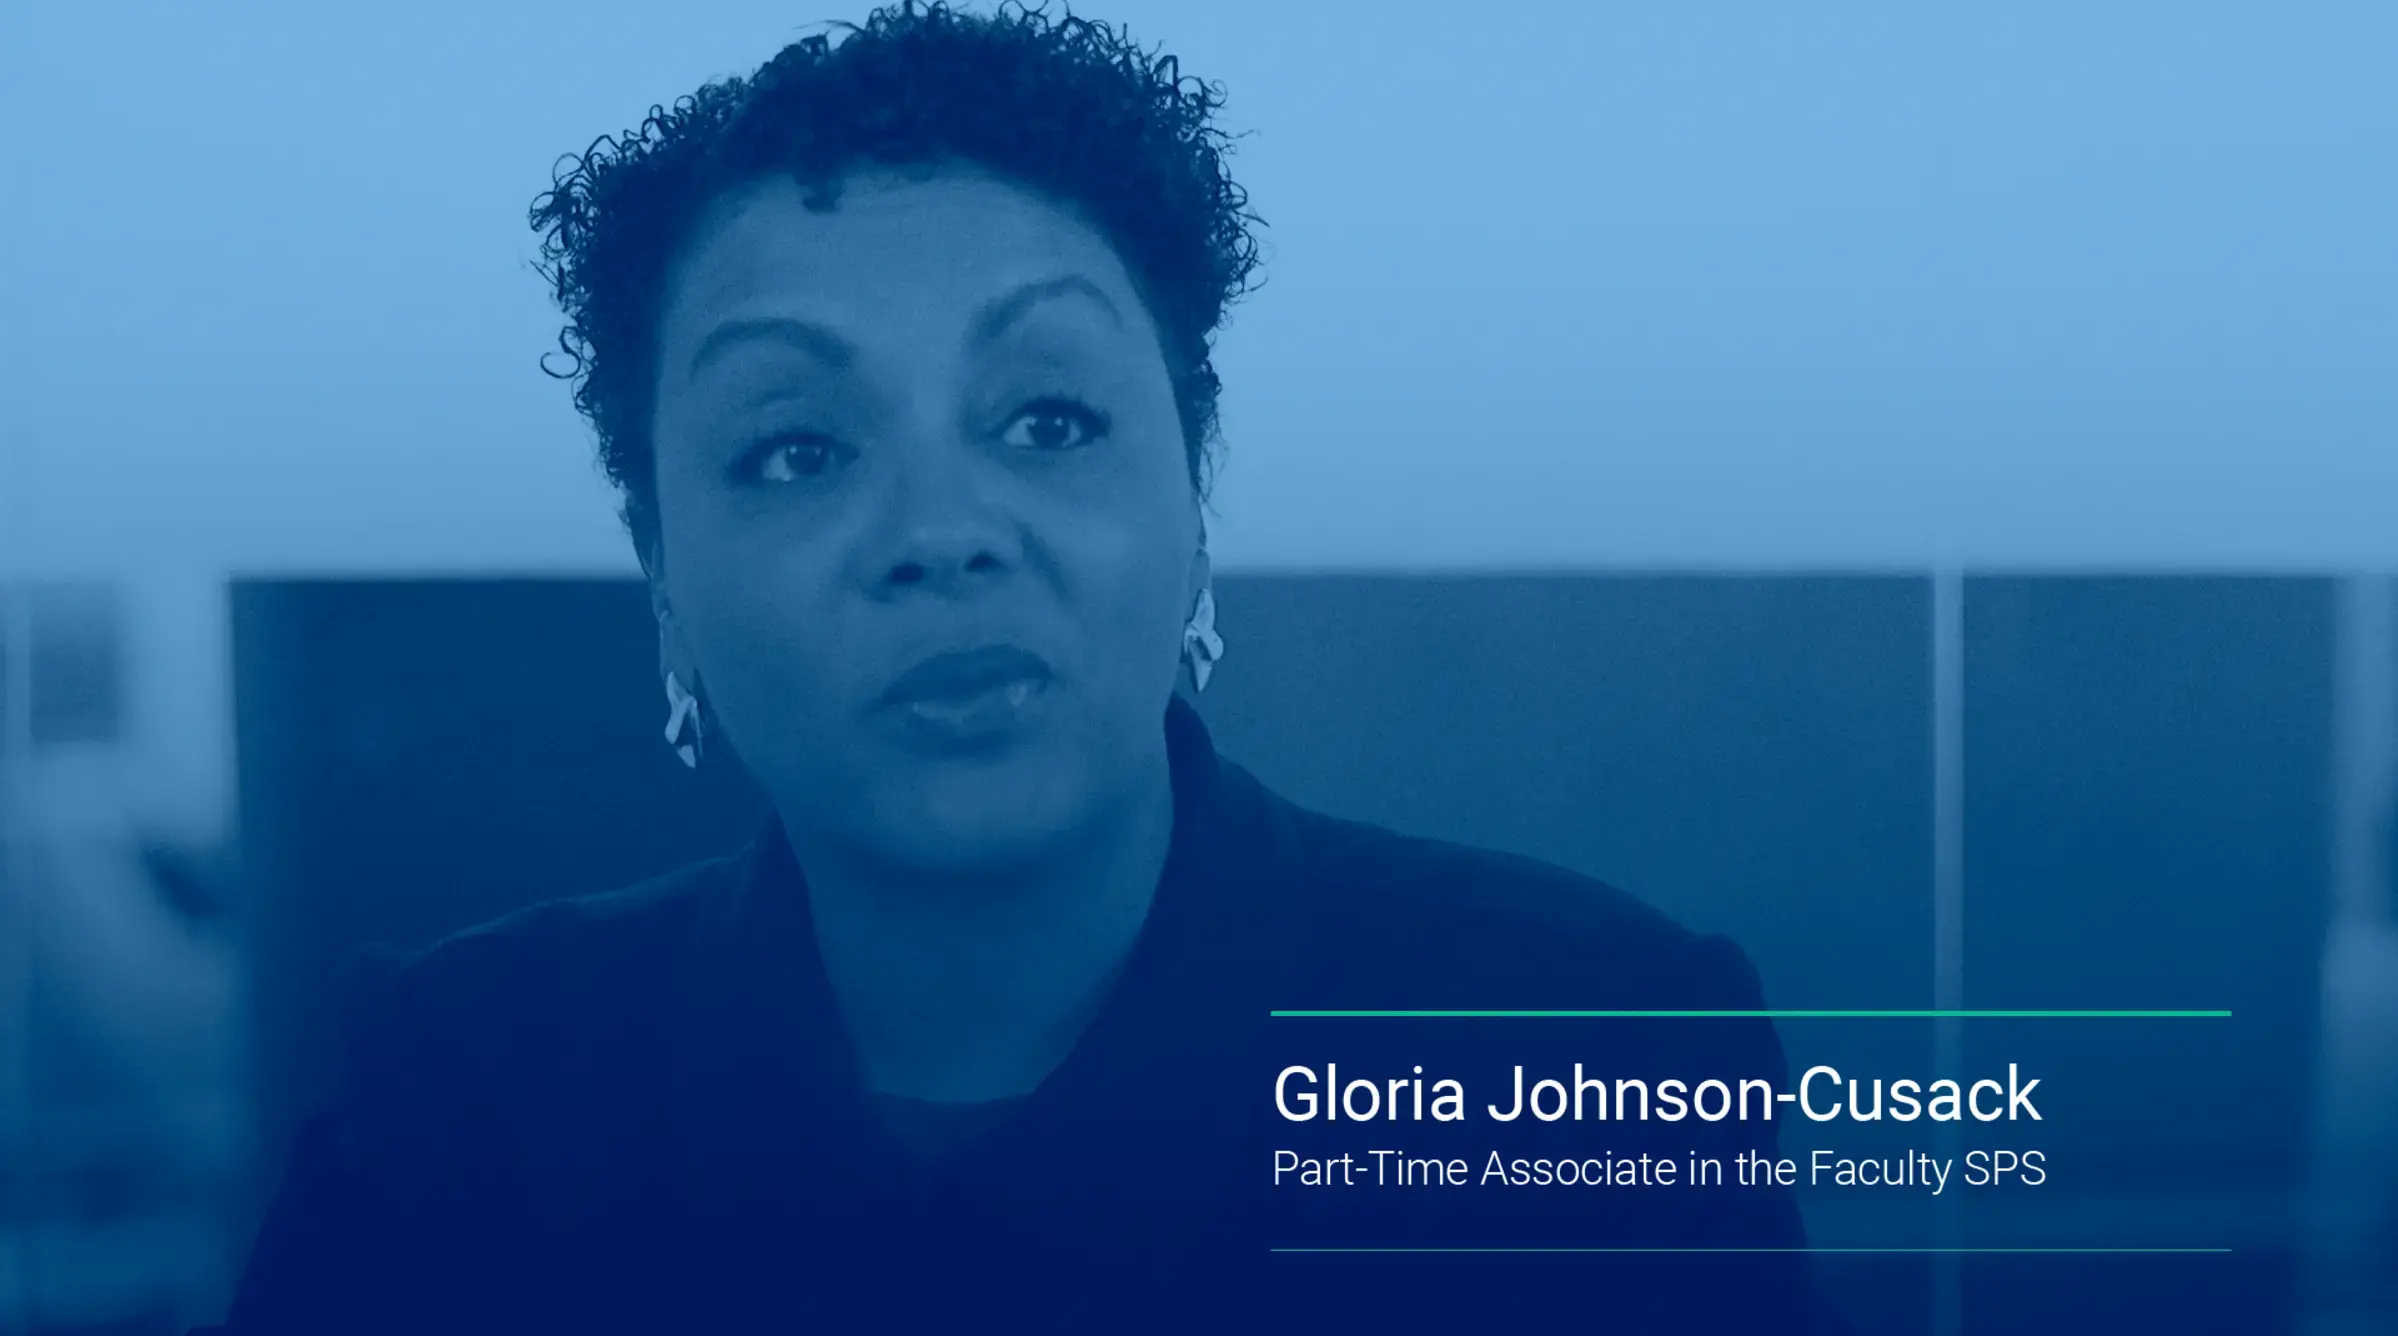 Video Still of NOPM Lecturer Gloria Johnson-Cusack